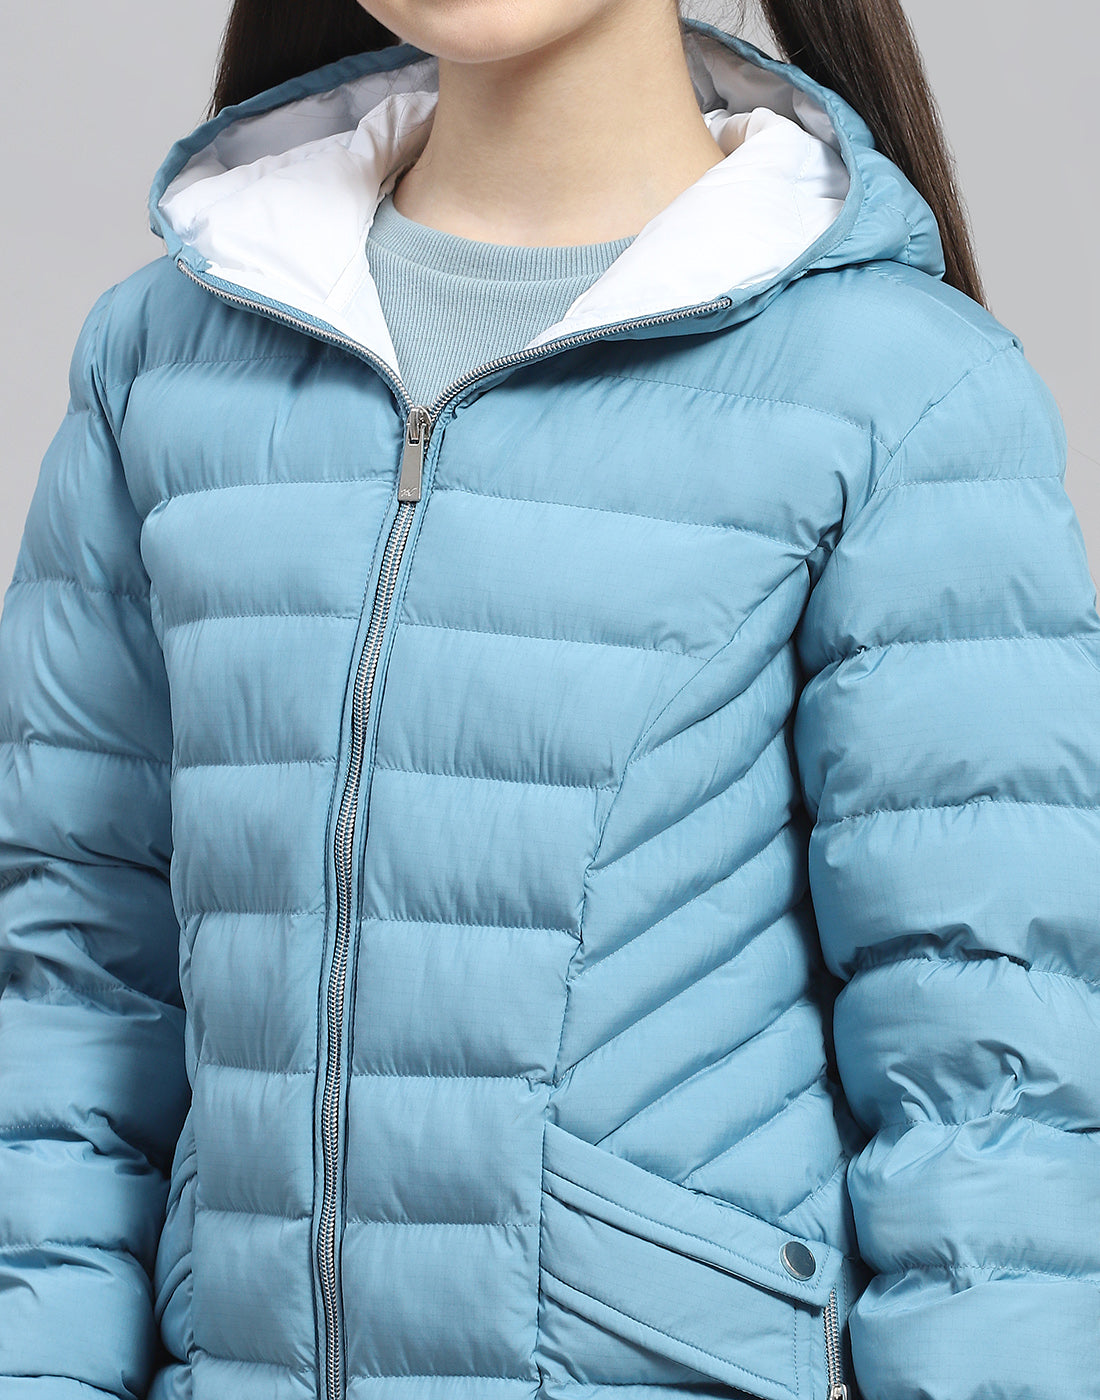 Girls Turquoise Blue Solid Hooded Full Sleeve Girls Jacket